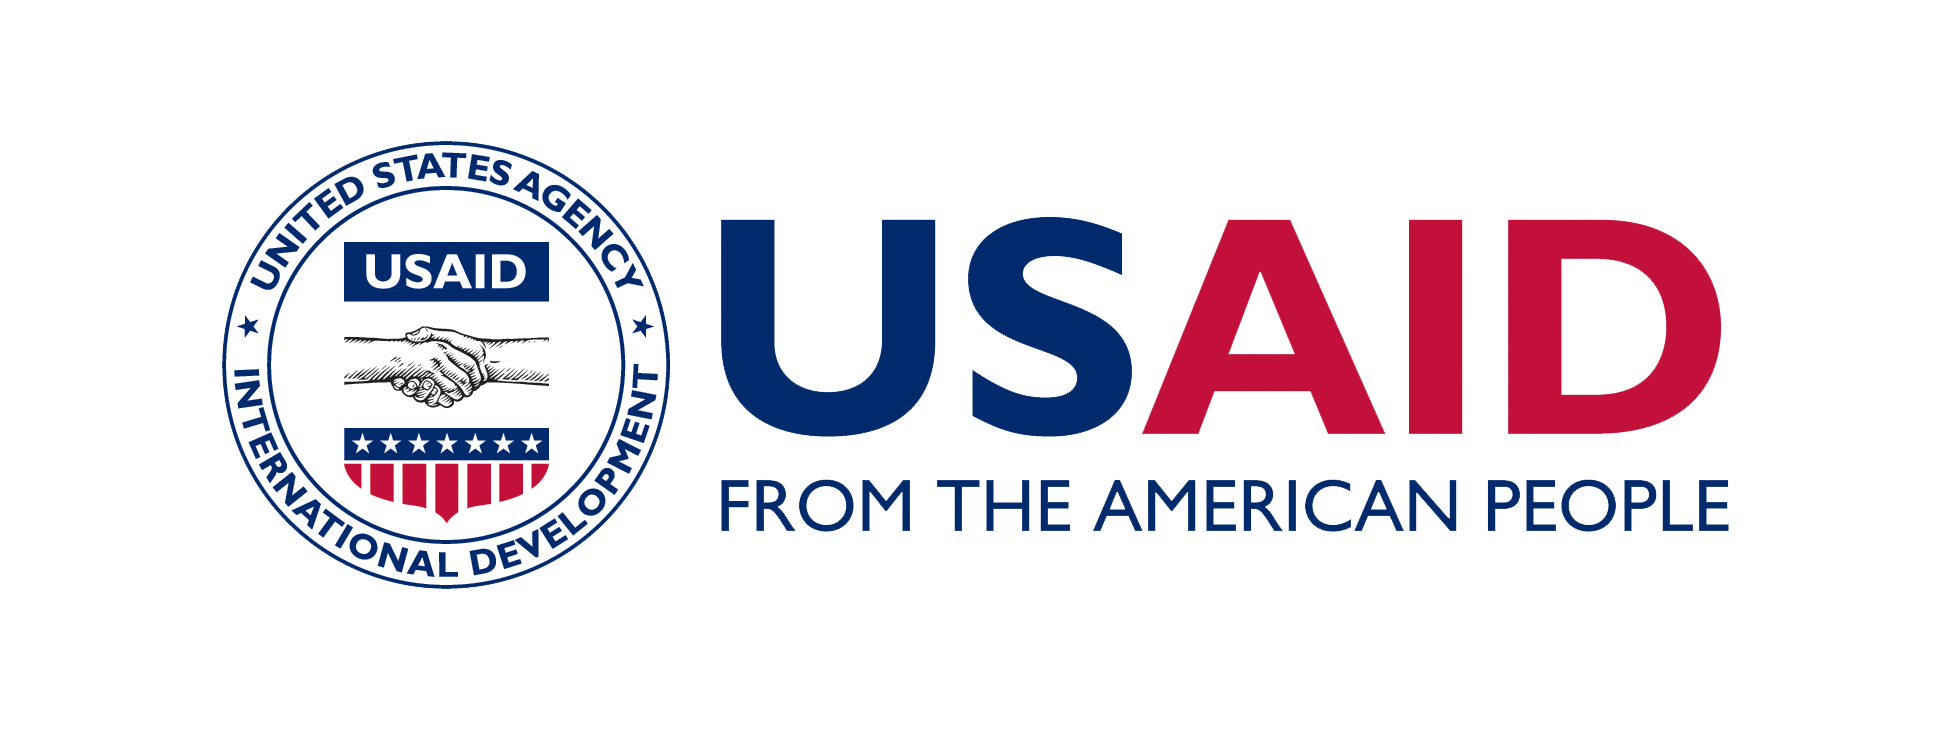 USA-Coopération: 1231 milliards CFA de l'USAID au Sénégal de 1961 à 2016 (AMADOU BÂ)